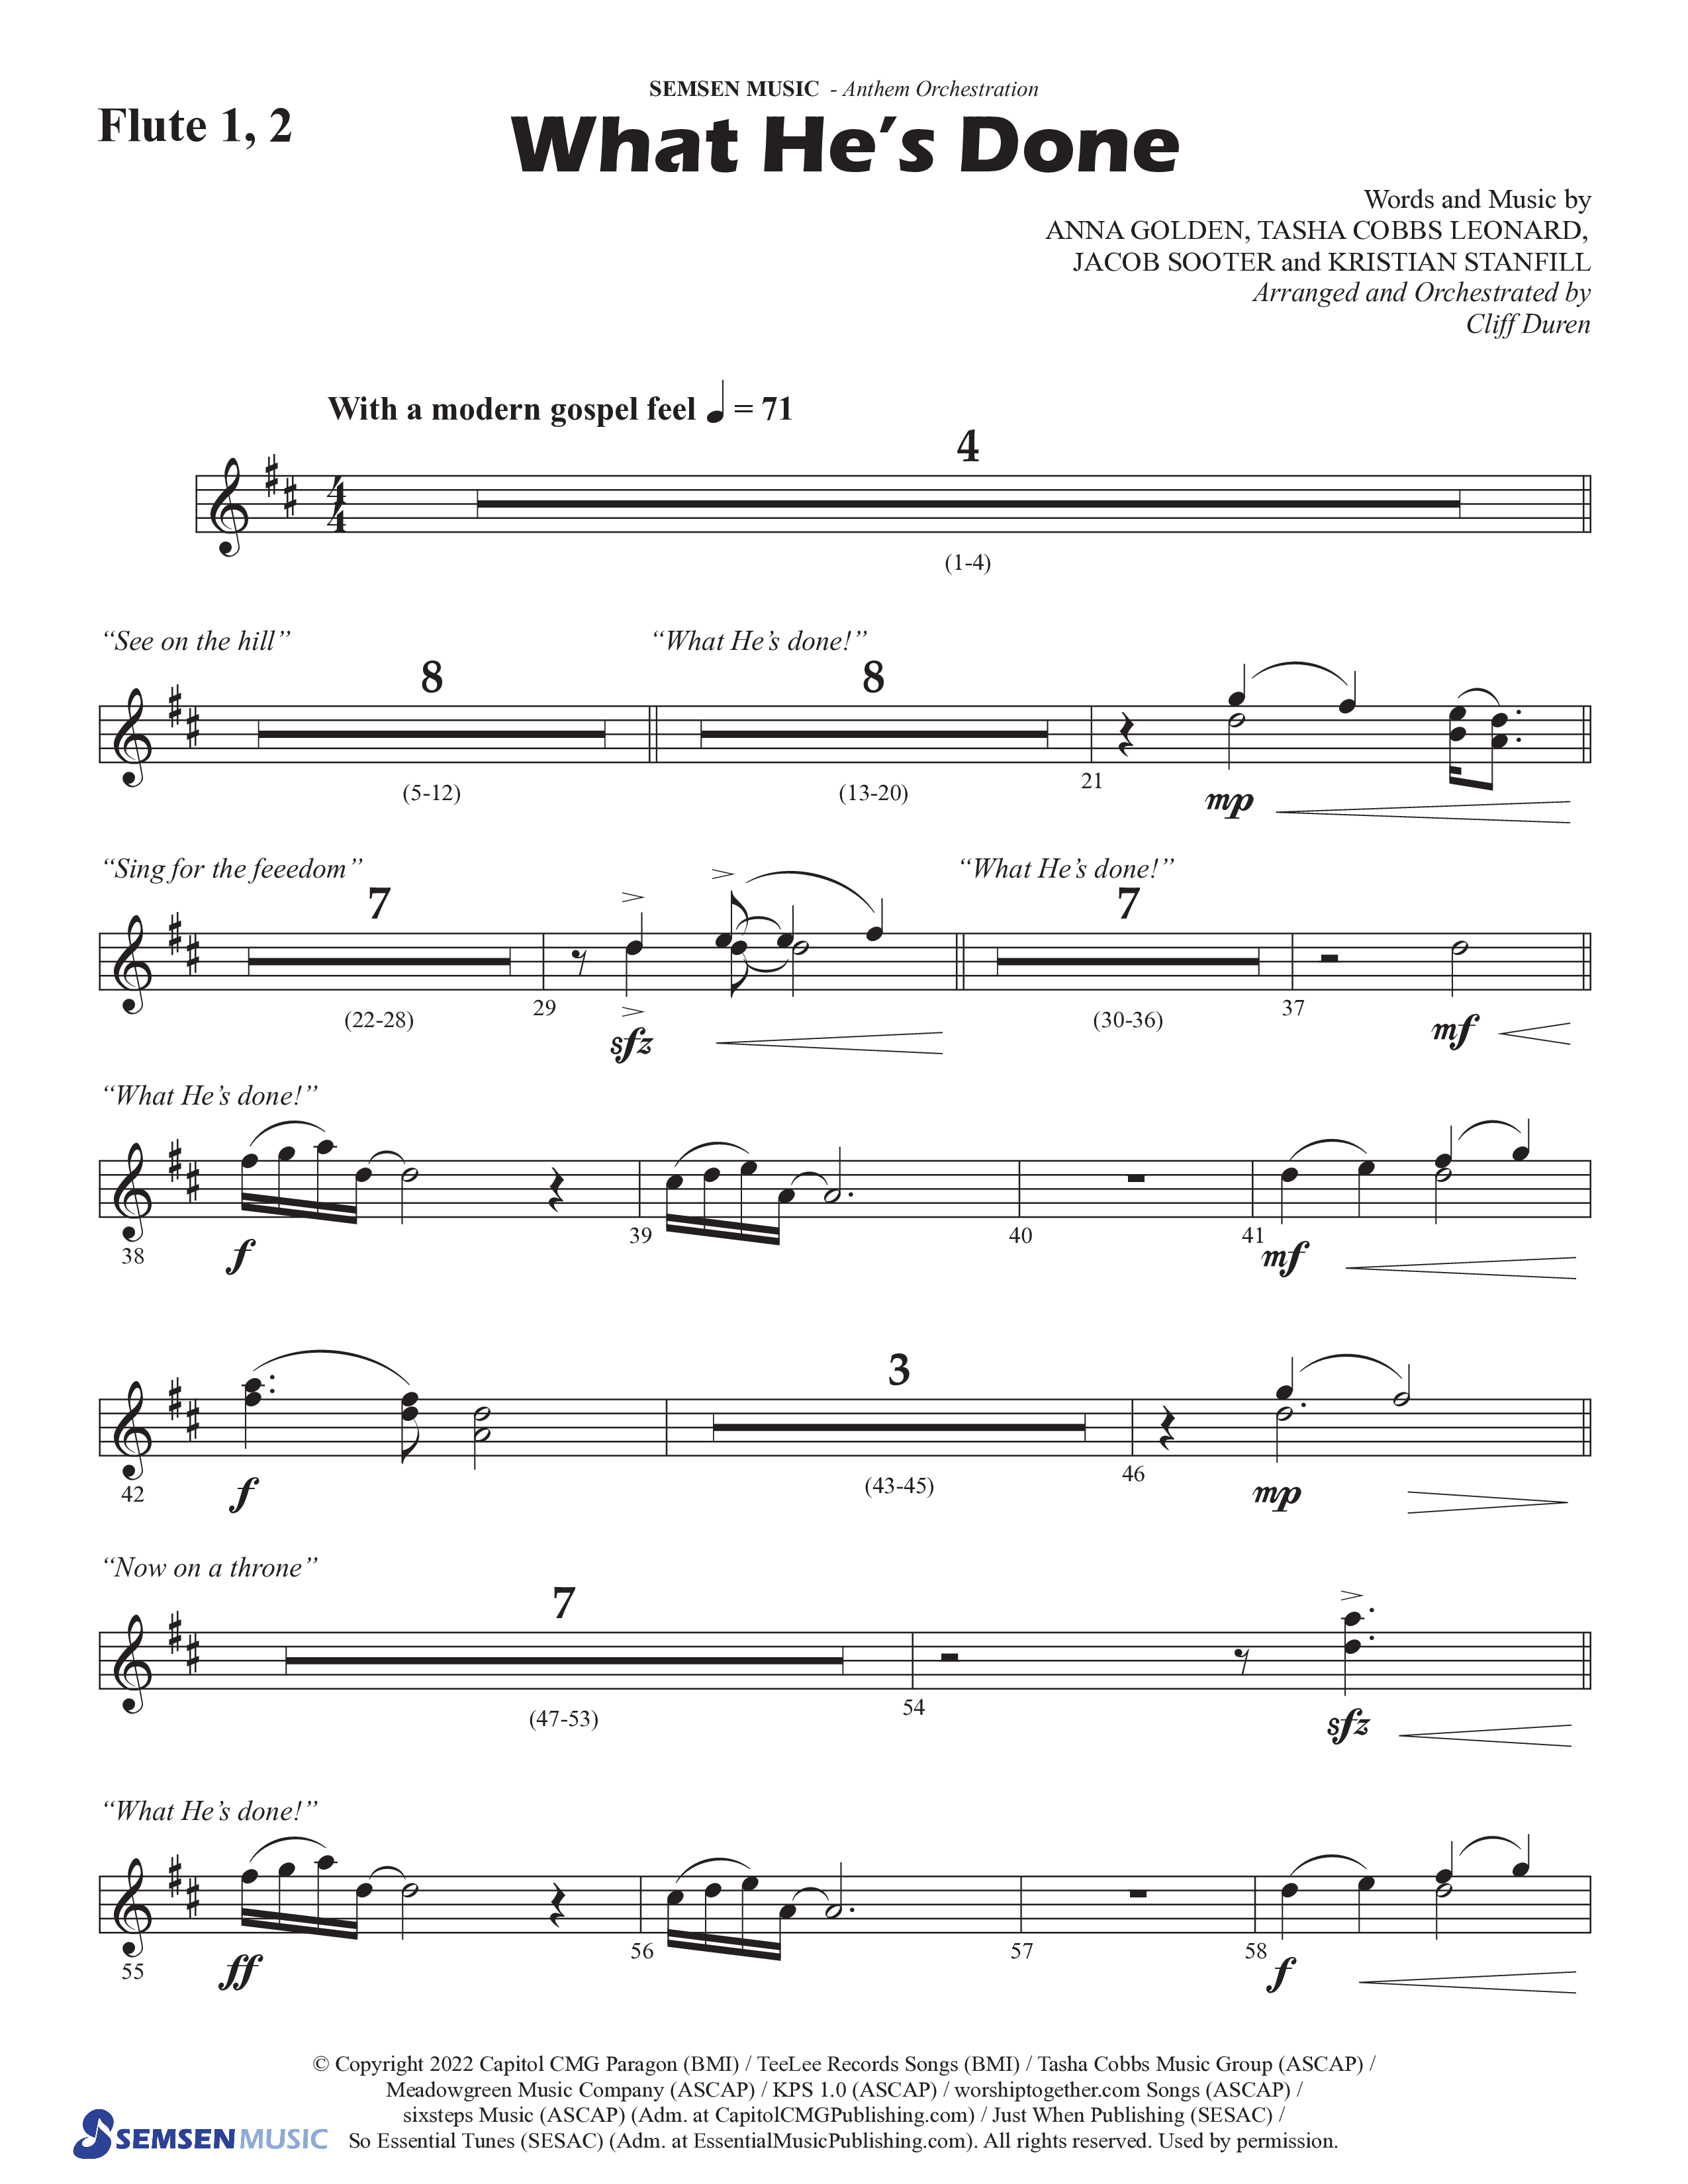 What He's Done (Choral Anthem SATB) Flute 1/2 (Semsen Music / Arr. Cliff Duren)